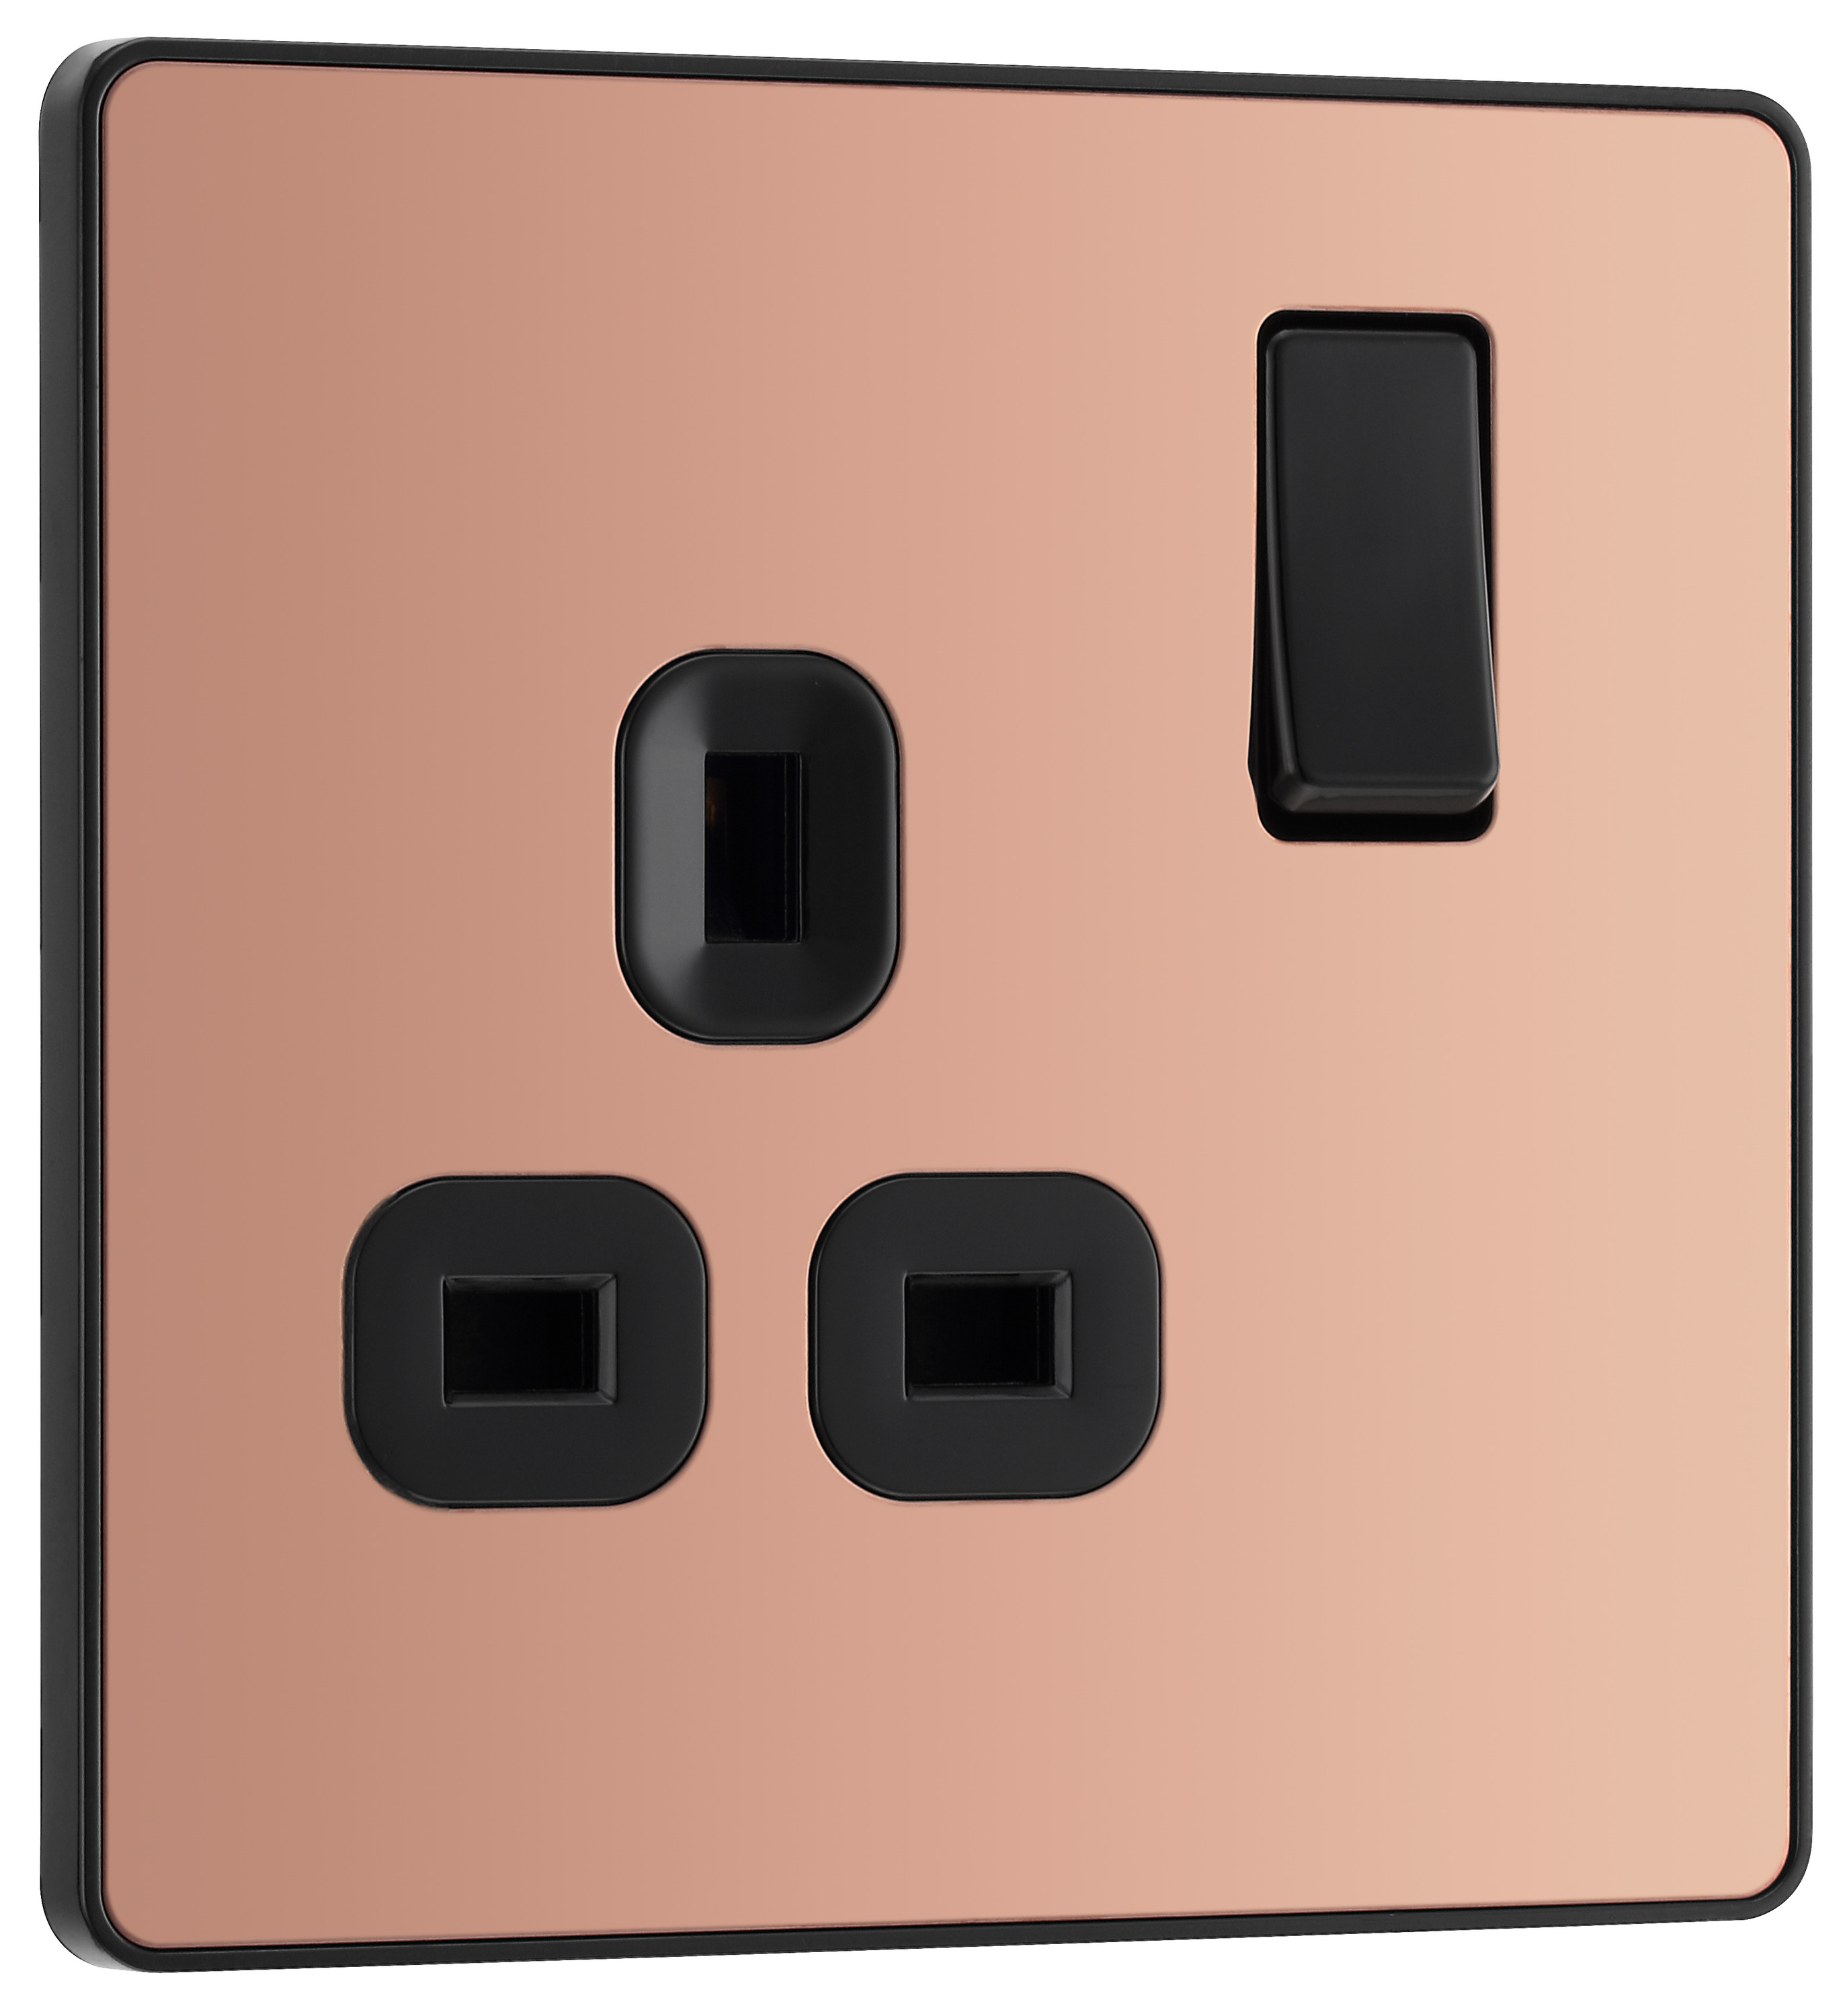 Image of BG Evolve Polished Copper 13A Single Switched Power Socket